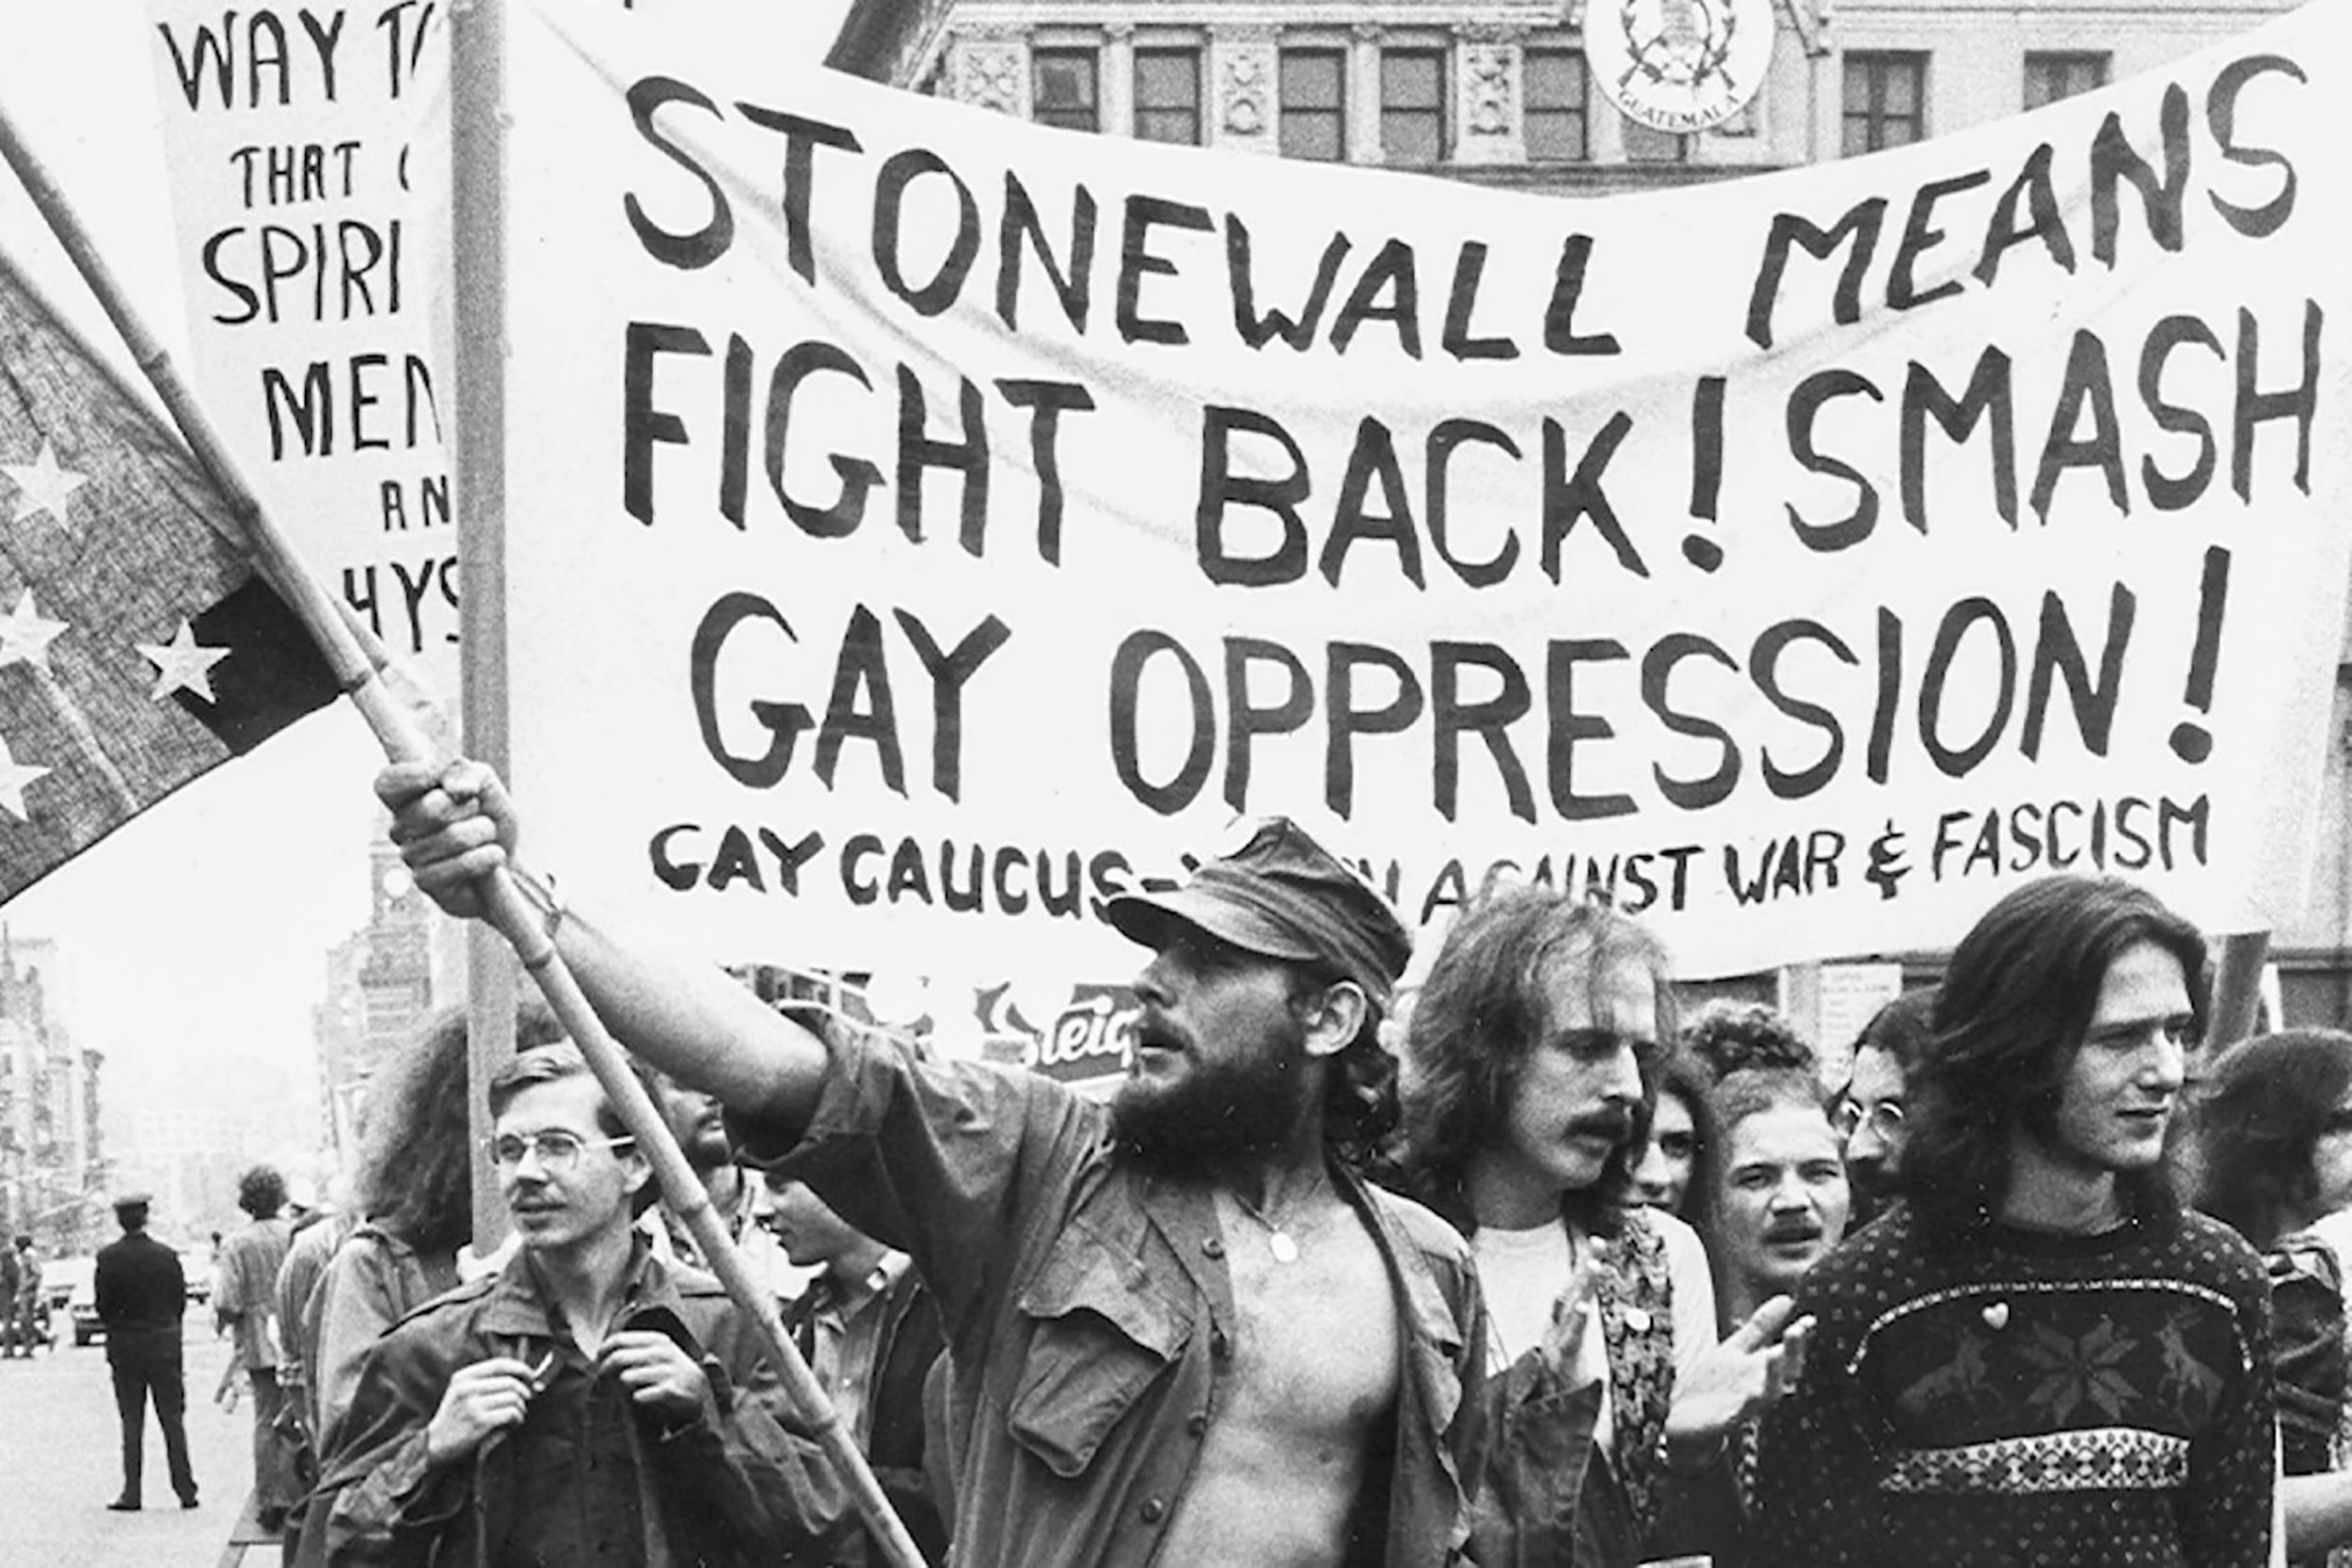 Photo of protestors at the Stonewall Riot